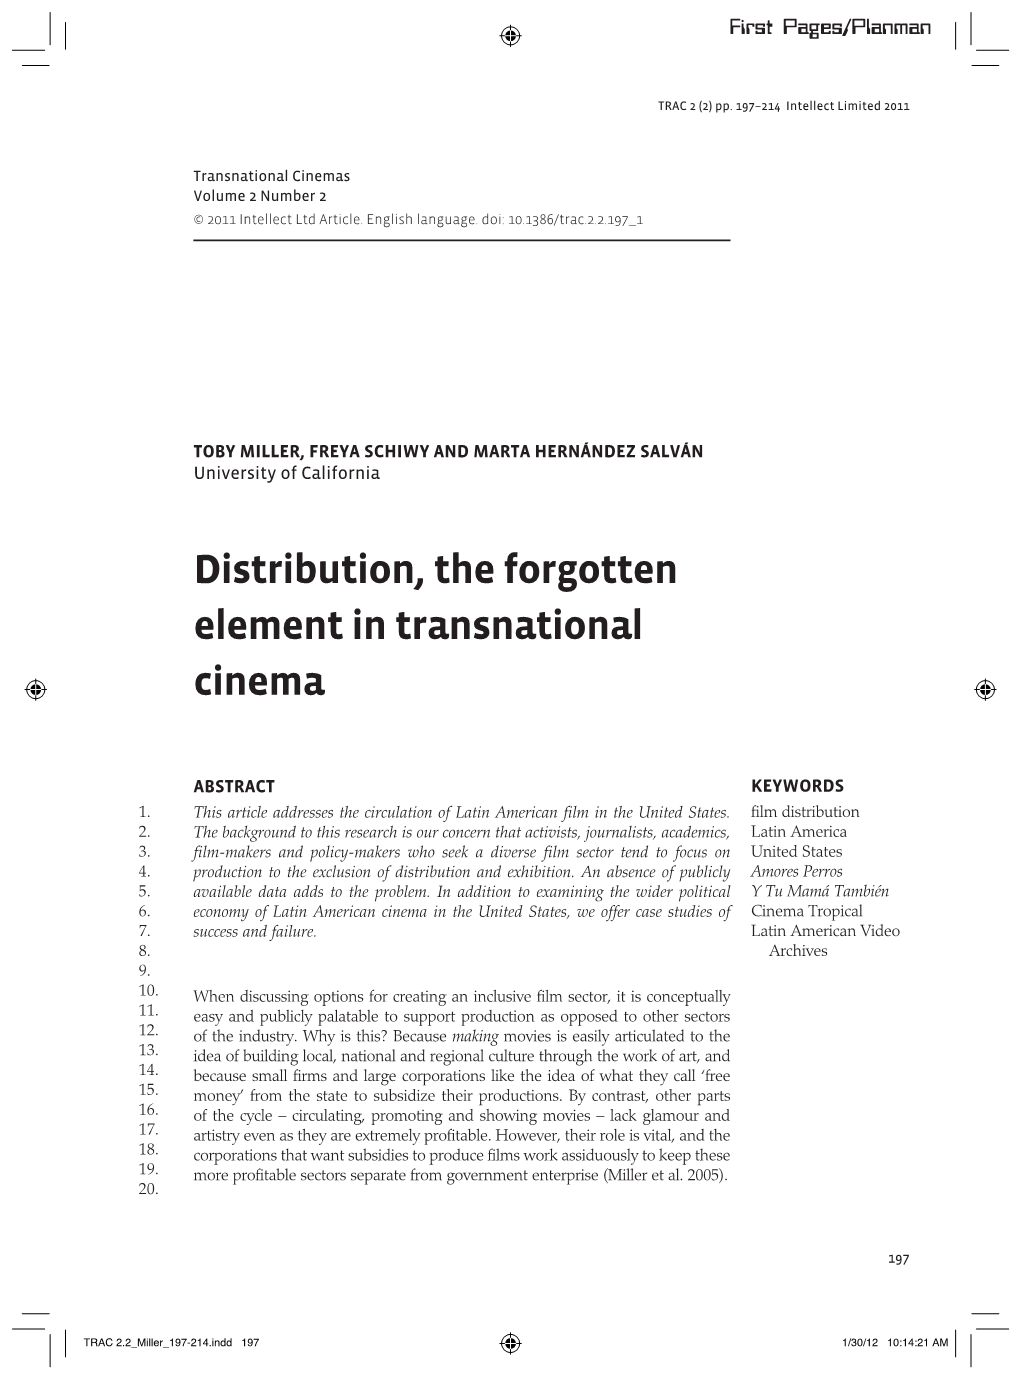 Distribution, the Forgotten Element in Transnational Cinema